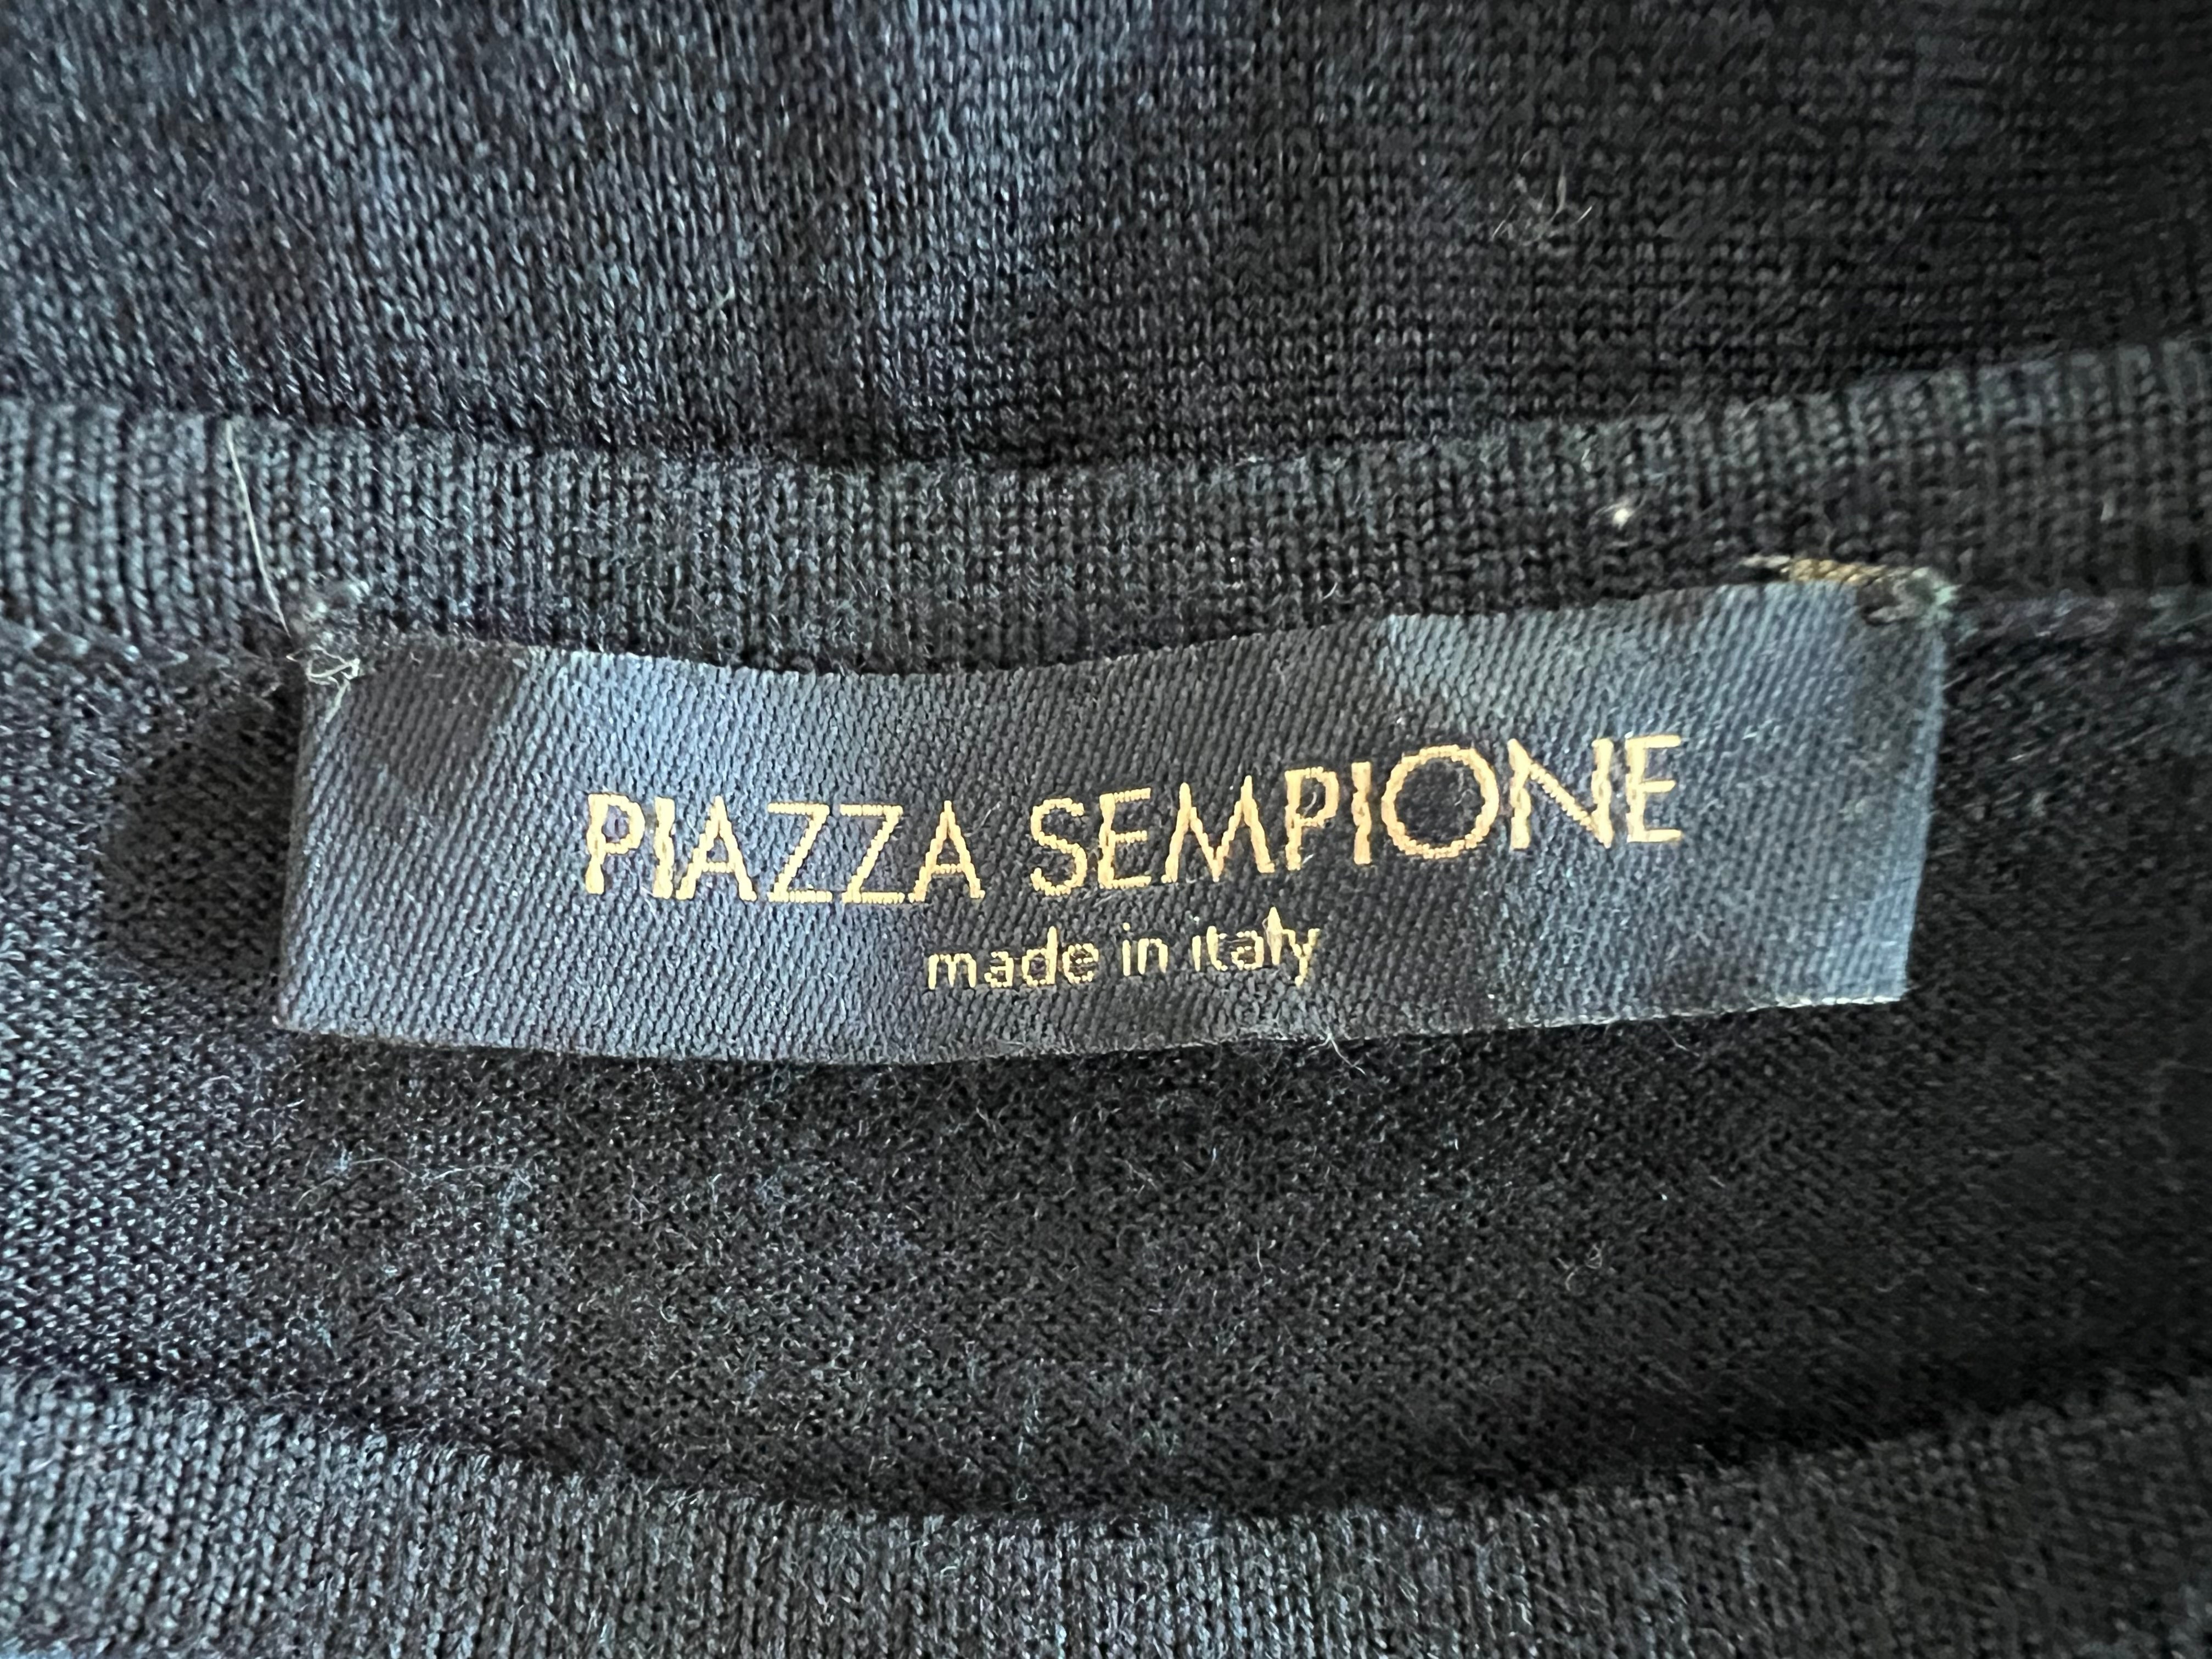 Piazza Sempione Navy Wool and Silk Top, L/XL